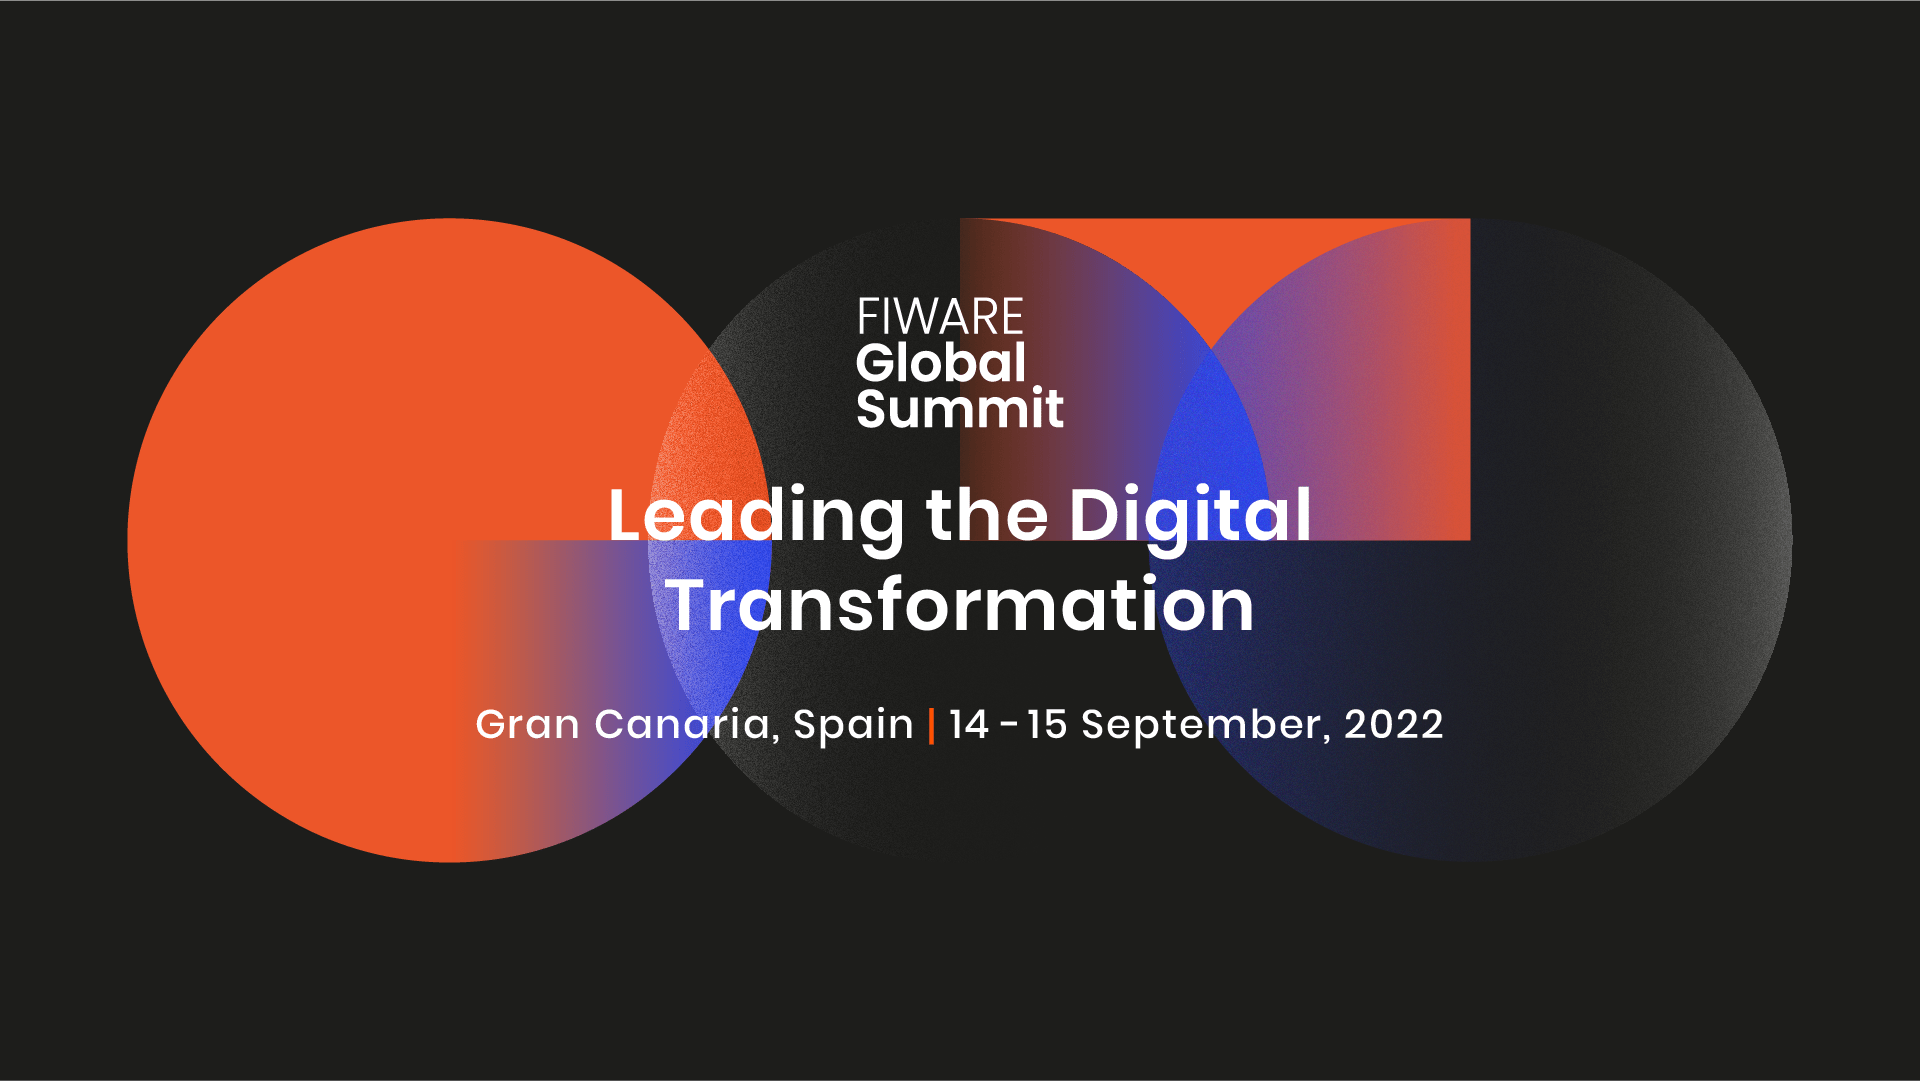 Fiware global summit 2022